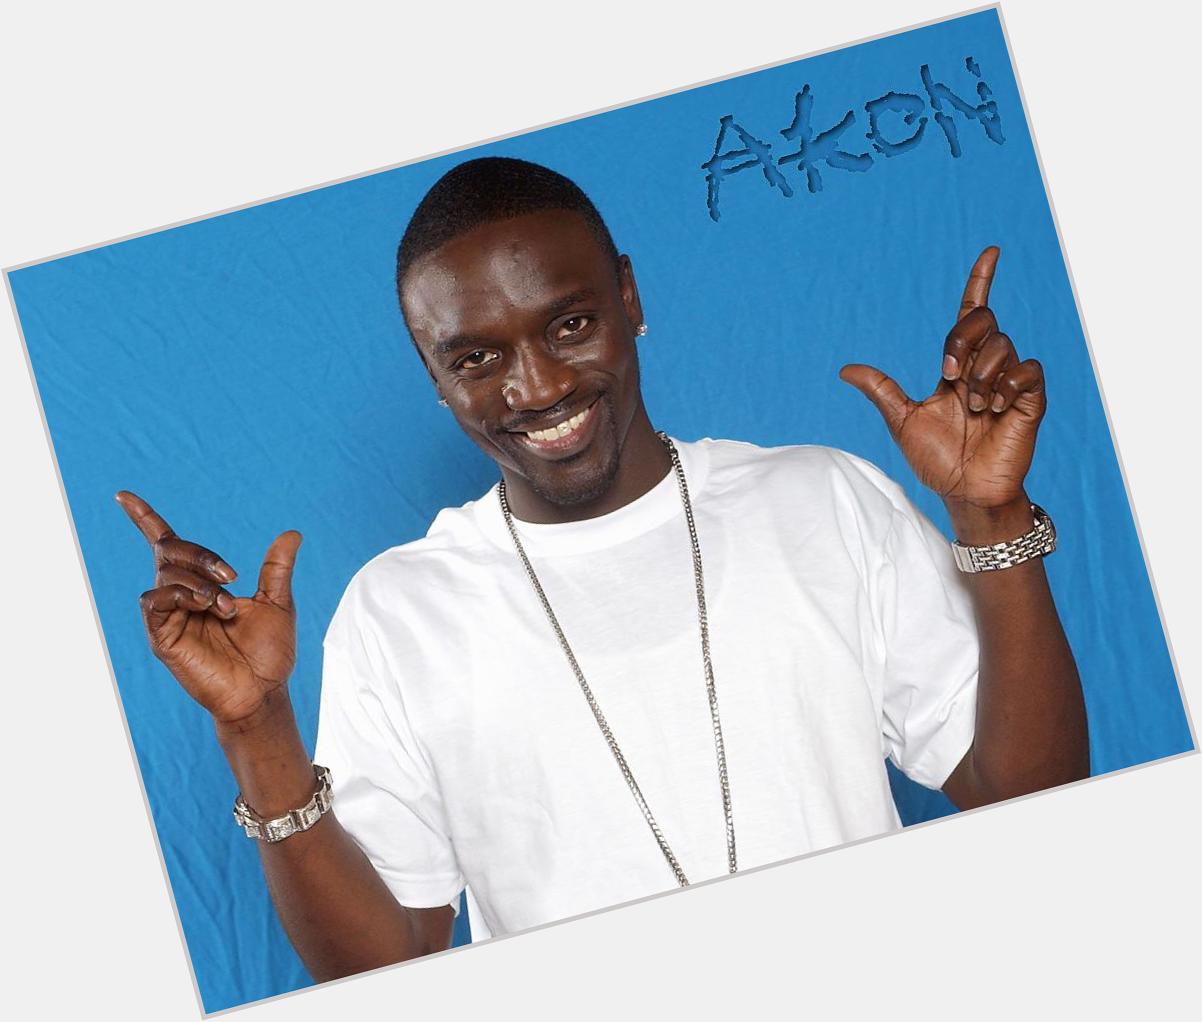 Happy Birthday to Akon, who turns 42 today! 